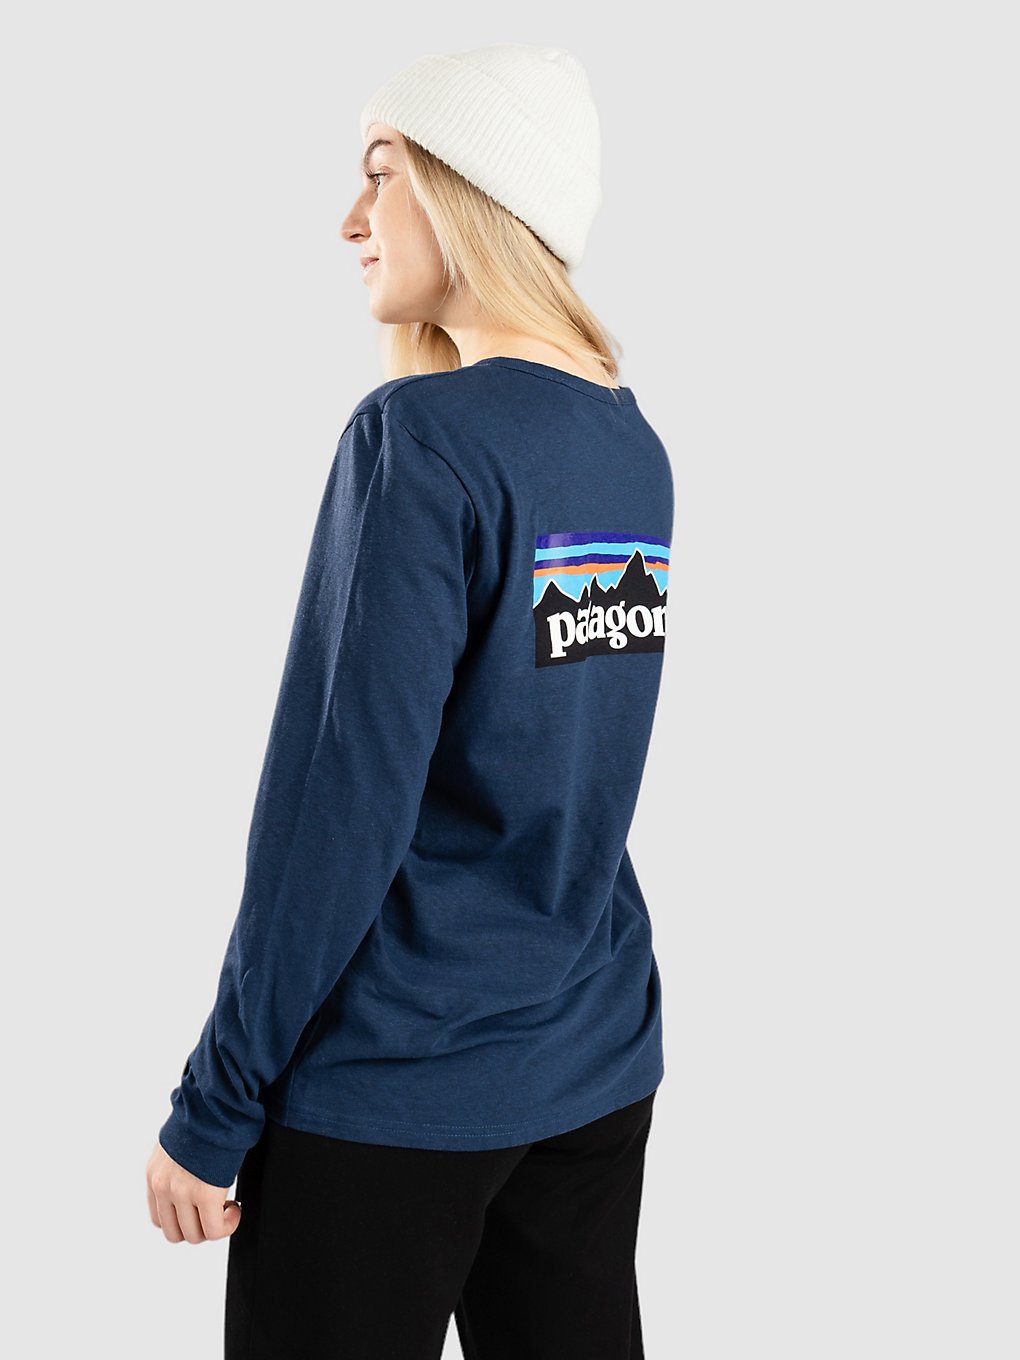 Patagonia P-6 Logo Responsibili Longsleeve tidepool blue kaufen